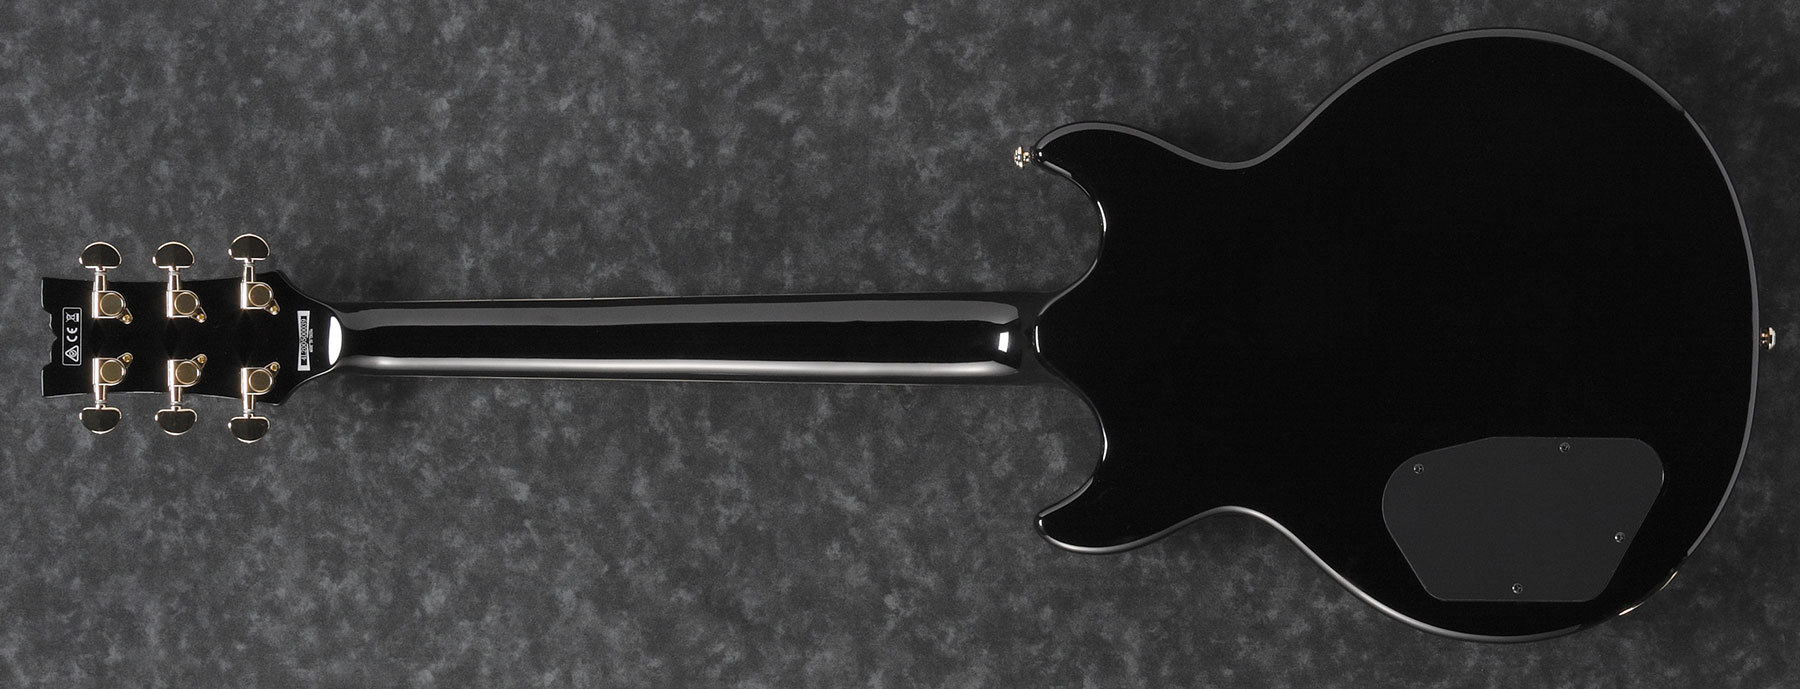 Ibanez Ar520h Bk Standard Hh Ht Jat - Black - Hollow bodytock elektrische gitaar - Variation 1